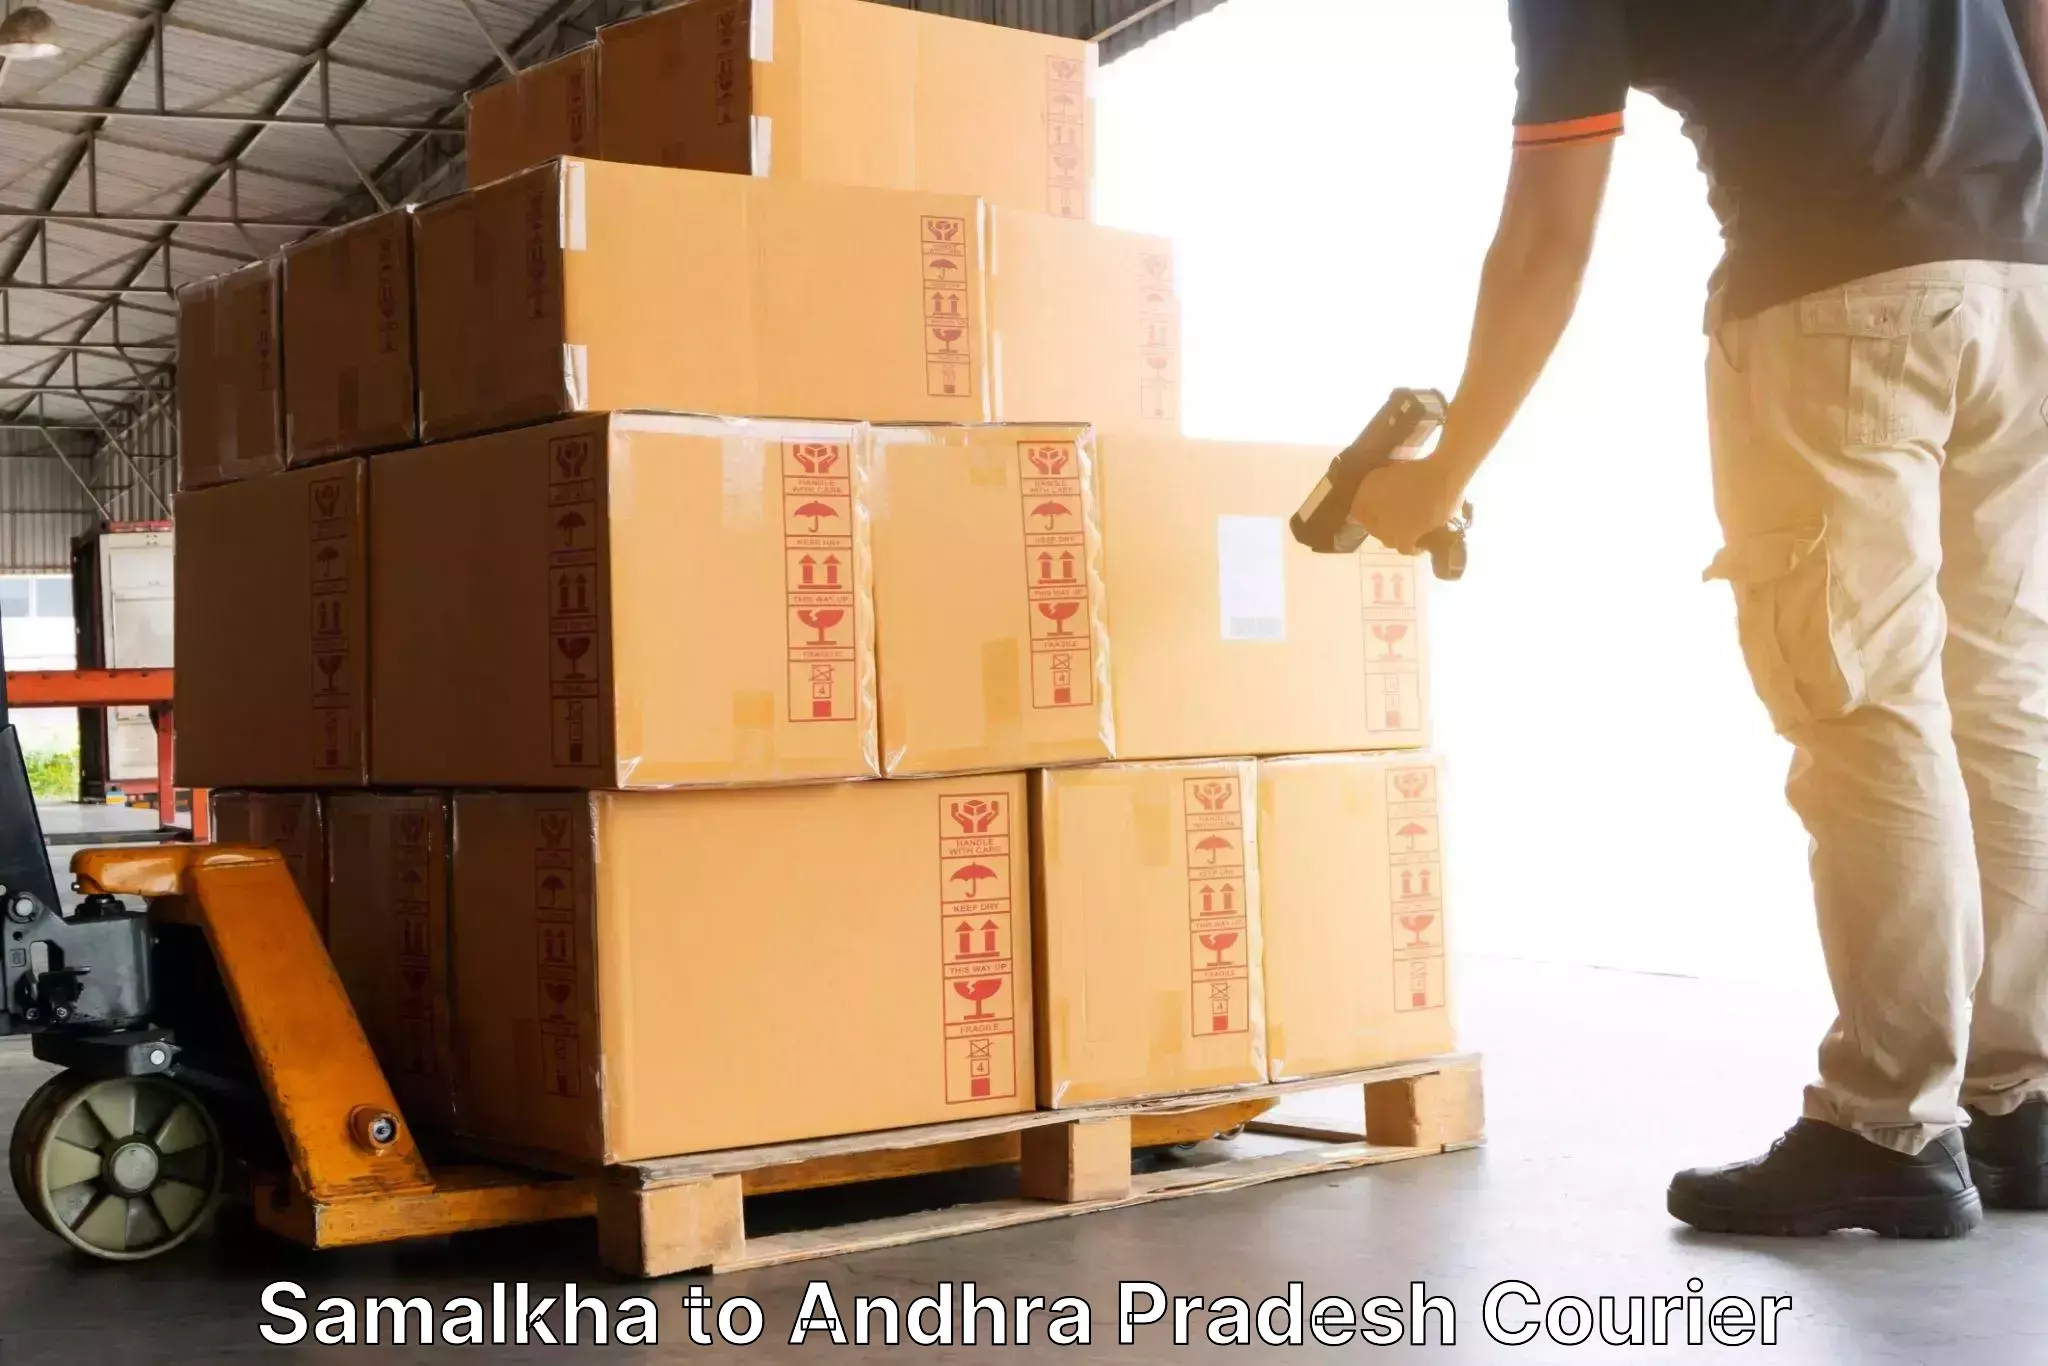 Expedited parcel delivery in Samalkha to Visakhapatnam Port